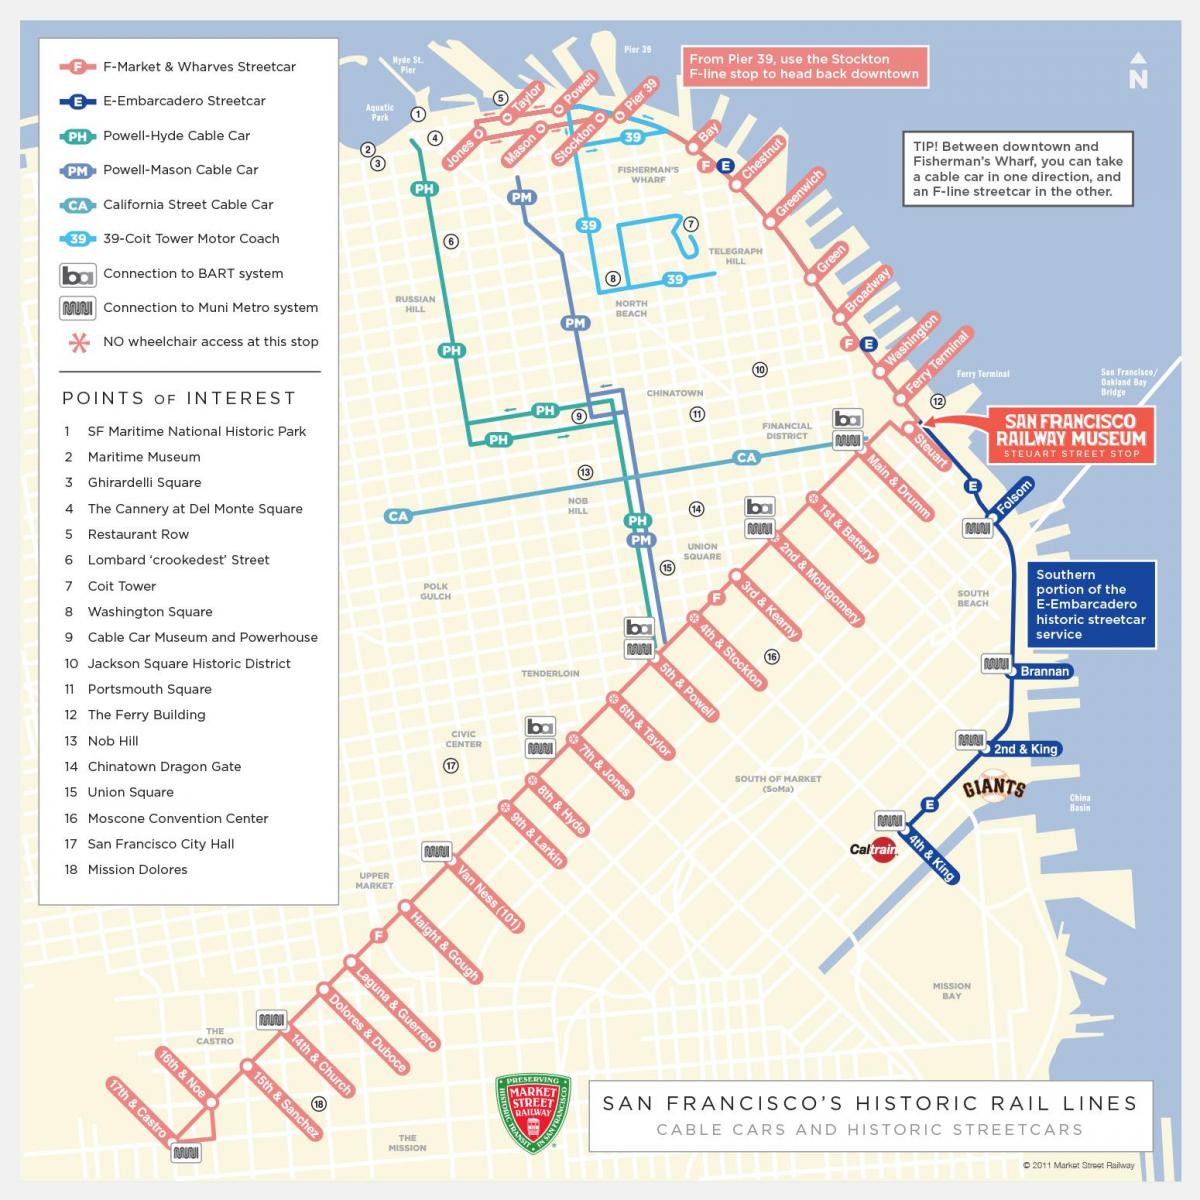 Сан Франциско кабель машины хуваарь газрын зураг